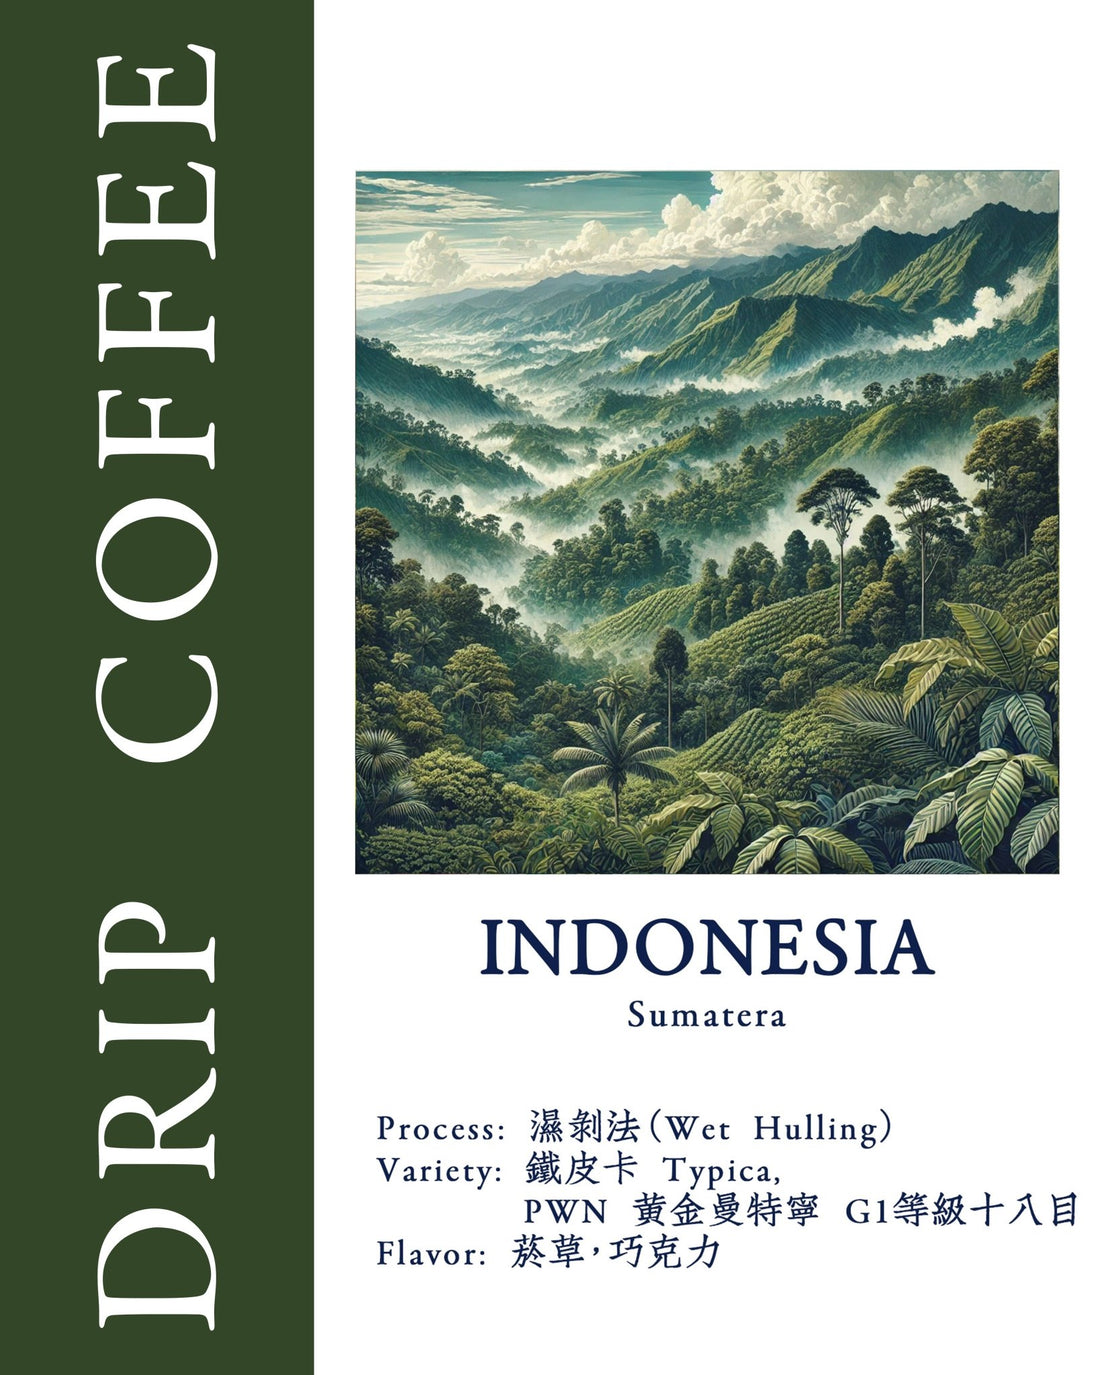 【Sumatra】Indonesia｜Dark Roast｜Typica Variety｜PWN Golden Mandheling G1 Grade Eighteen Screen ｜Wet Hulled Process｜Sip Coffee Lightly